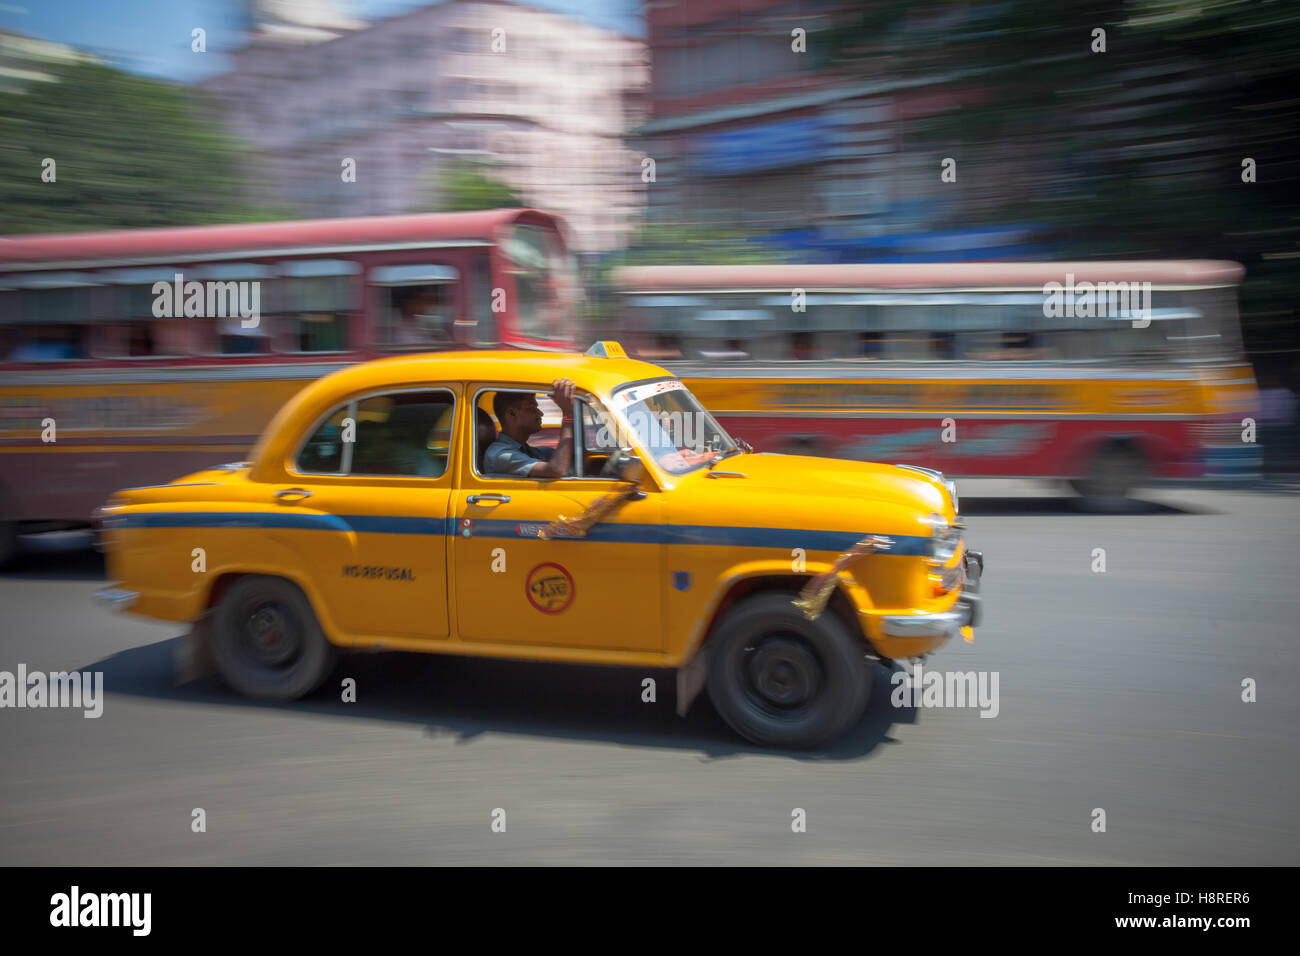 Gelbes Taxi Cab in Kolkata (Kalkutta) Indien Stockfoto